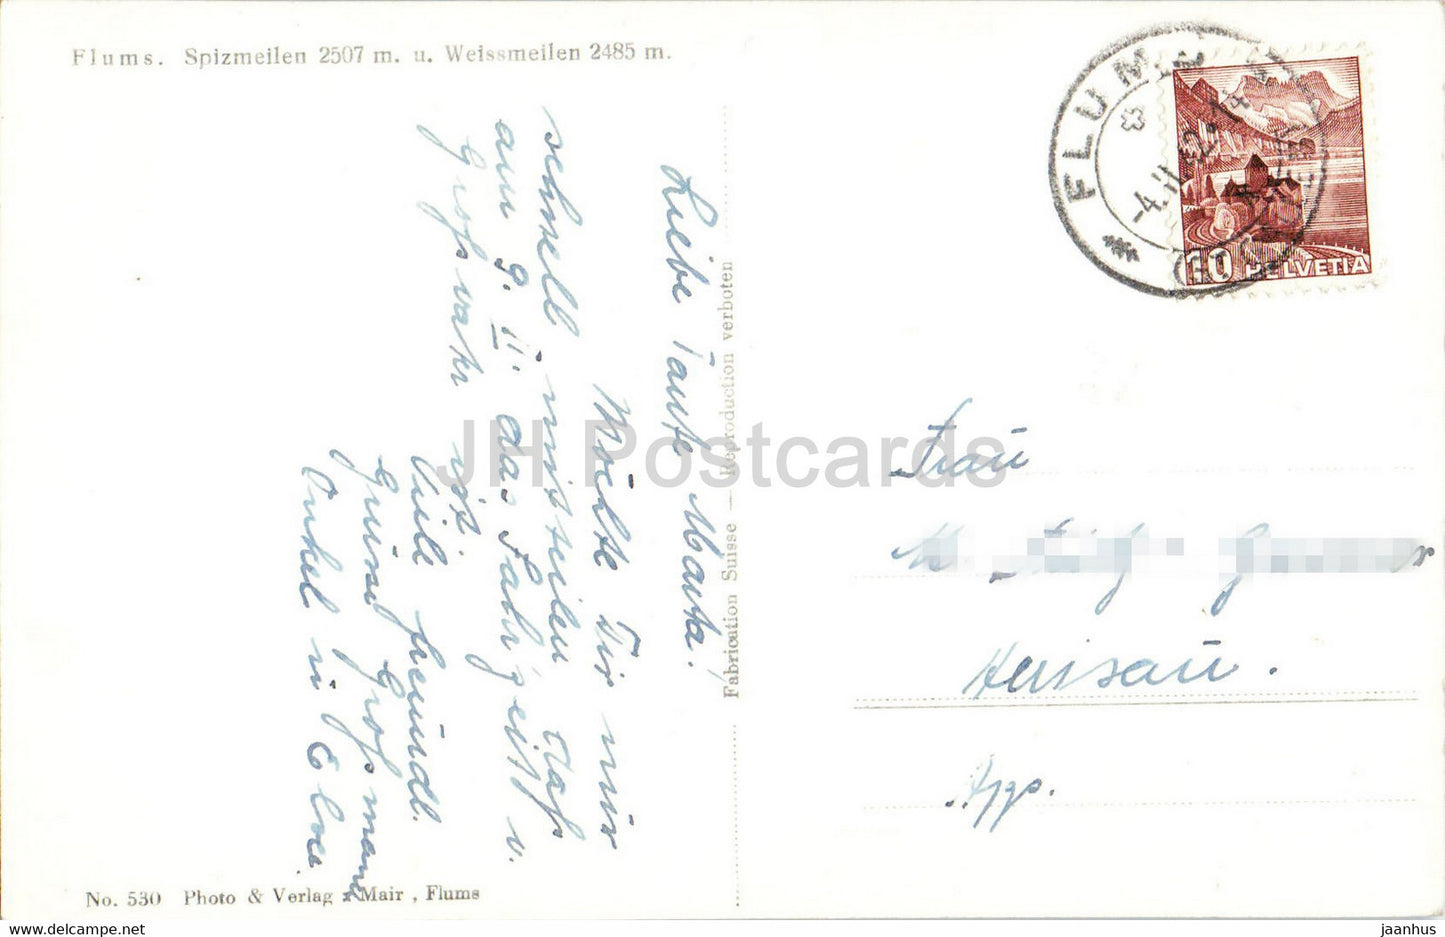 Flums - Spizmeilen 2507 mu Weissmeilen 2485 m - 1942 - carte postale ancienne - Suisse - d'occasion